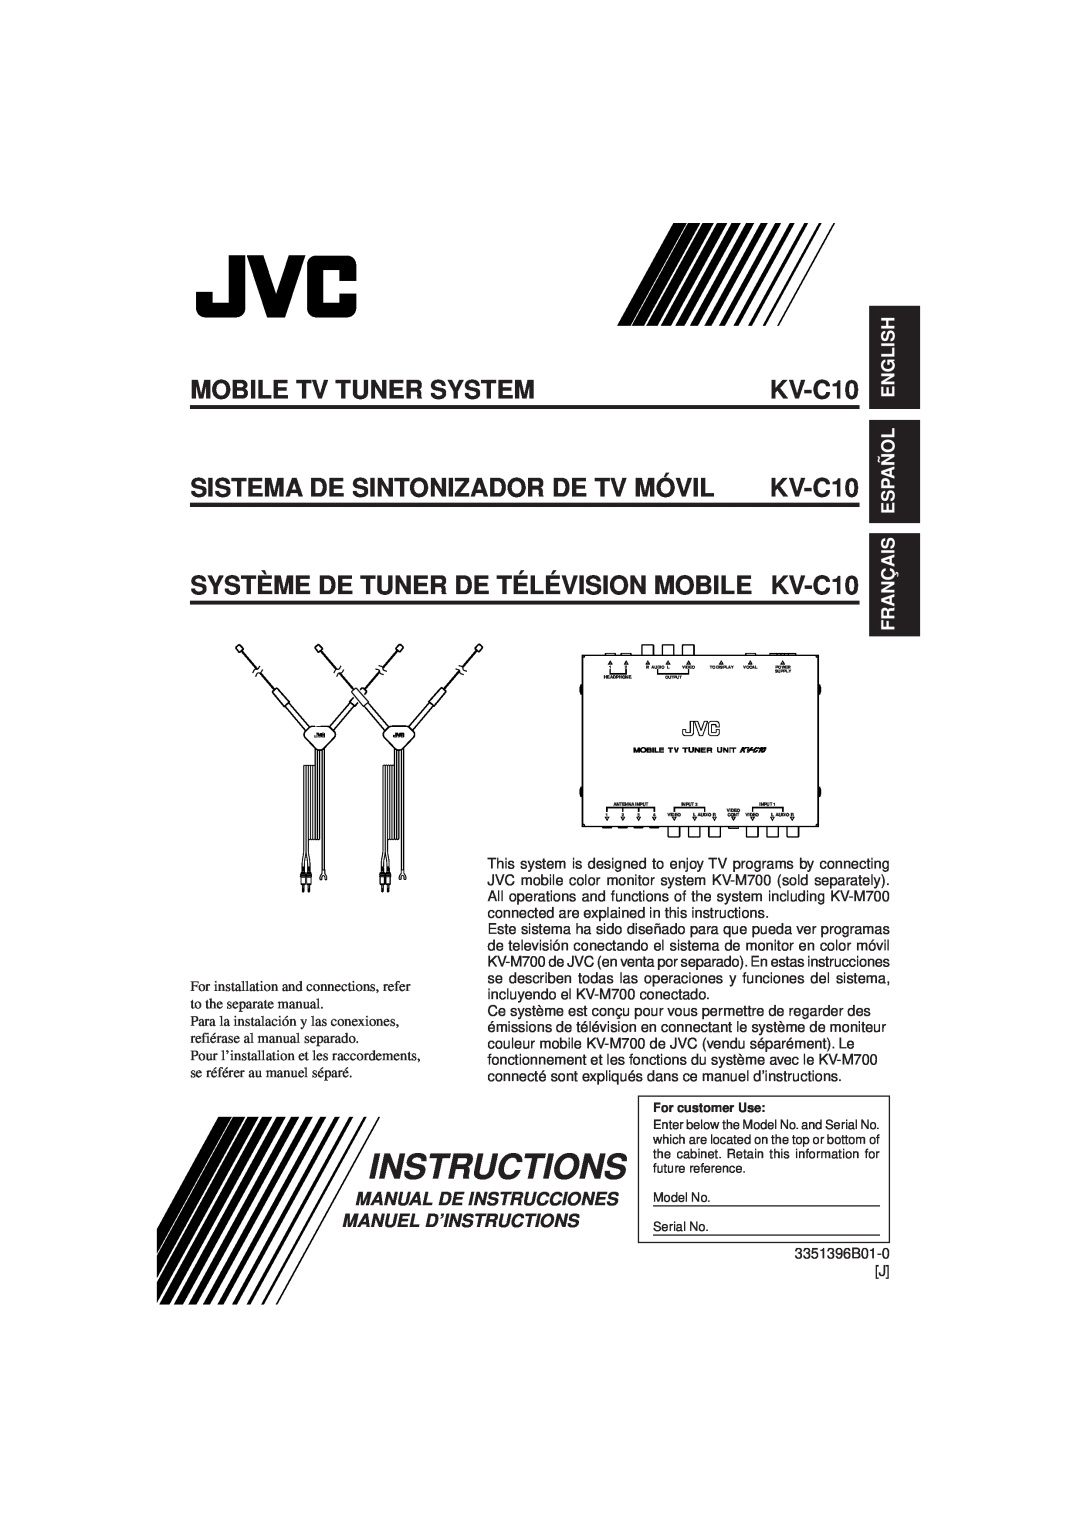 JVC KV-C10 manual Advertencia, Avertissement, Installation, English, Español, Français, Manuel d’installation/raccordement 